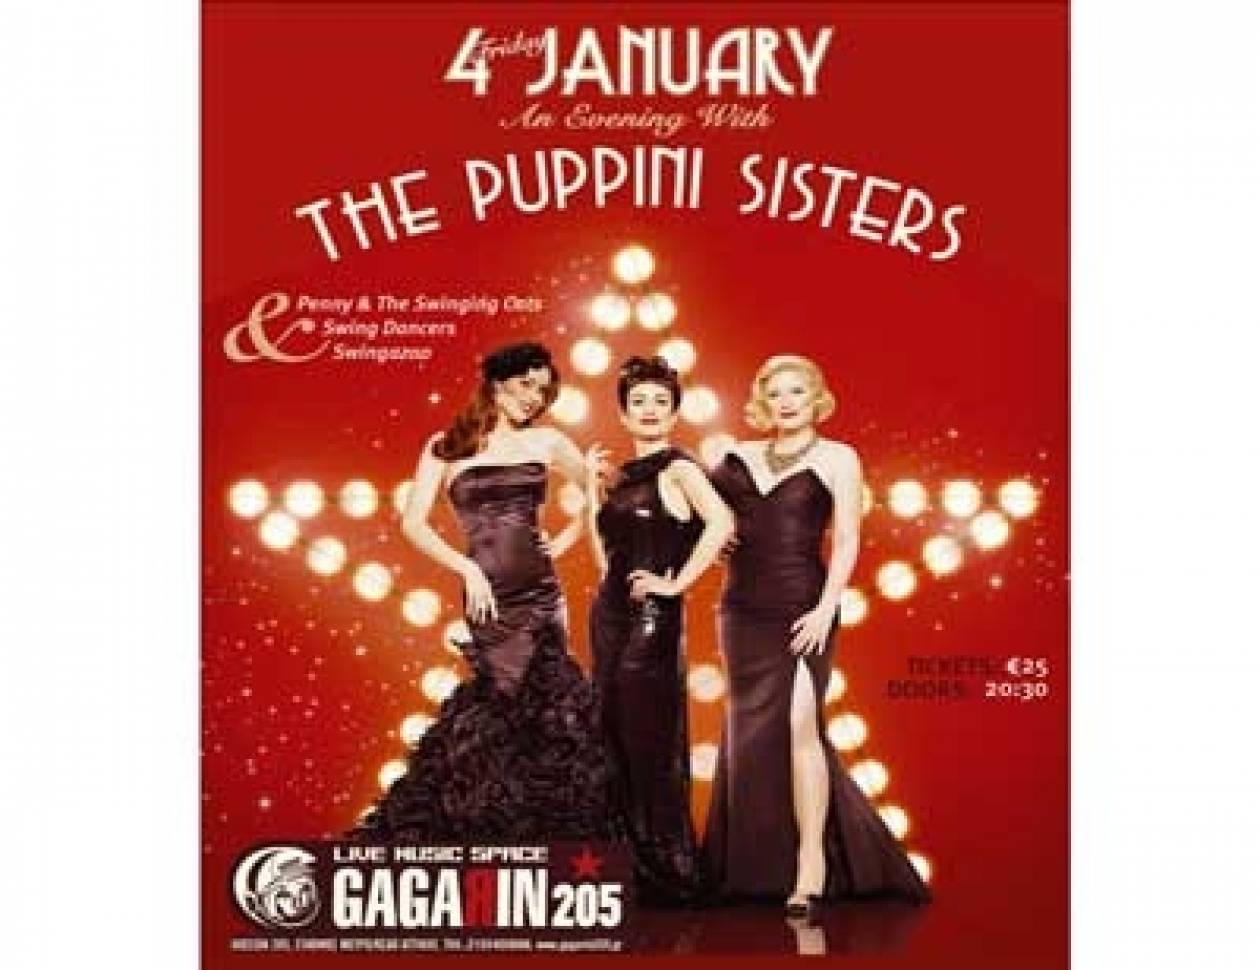 The Puppini Sisters live στο Gagarin205